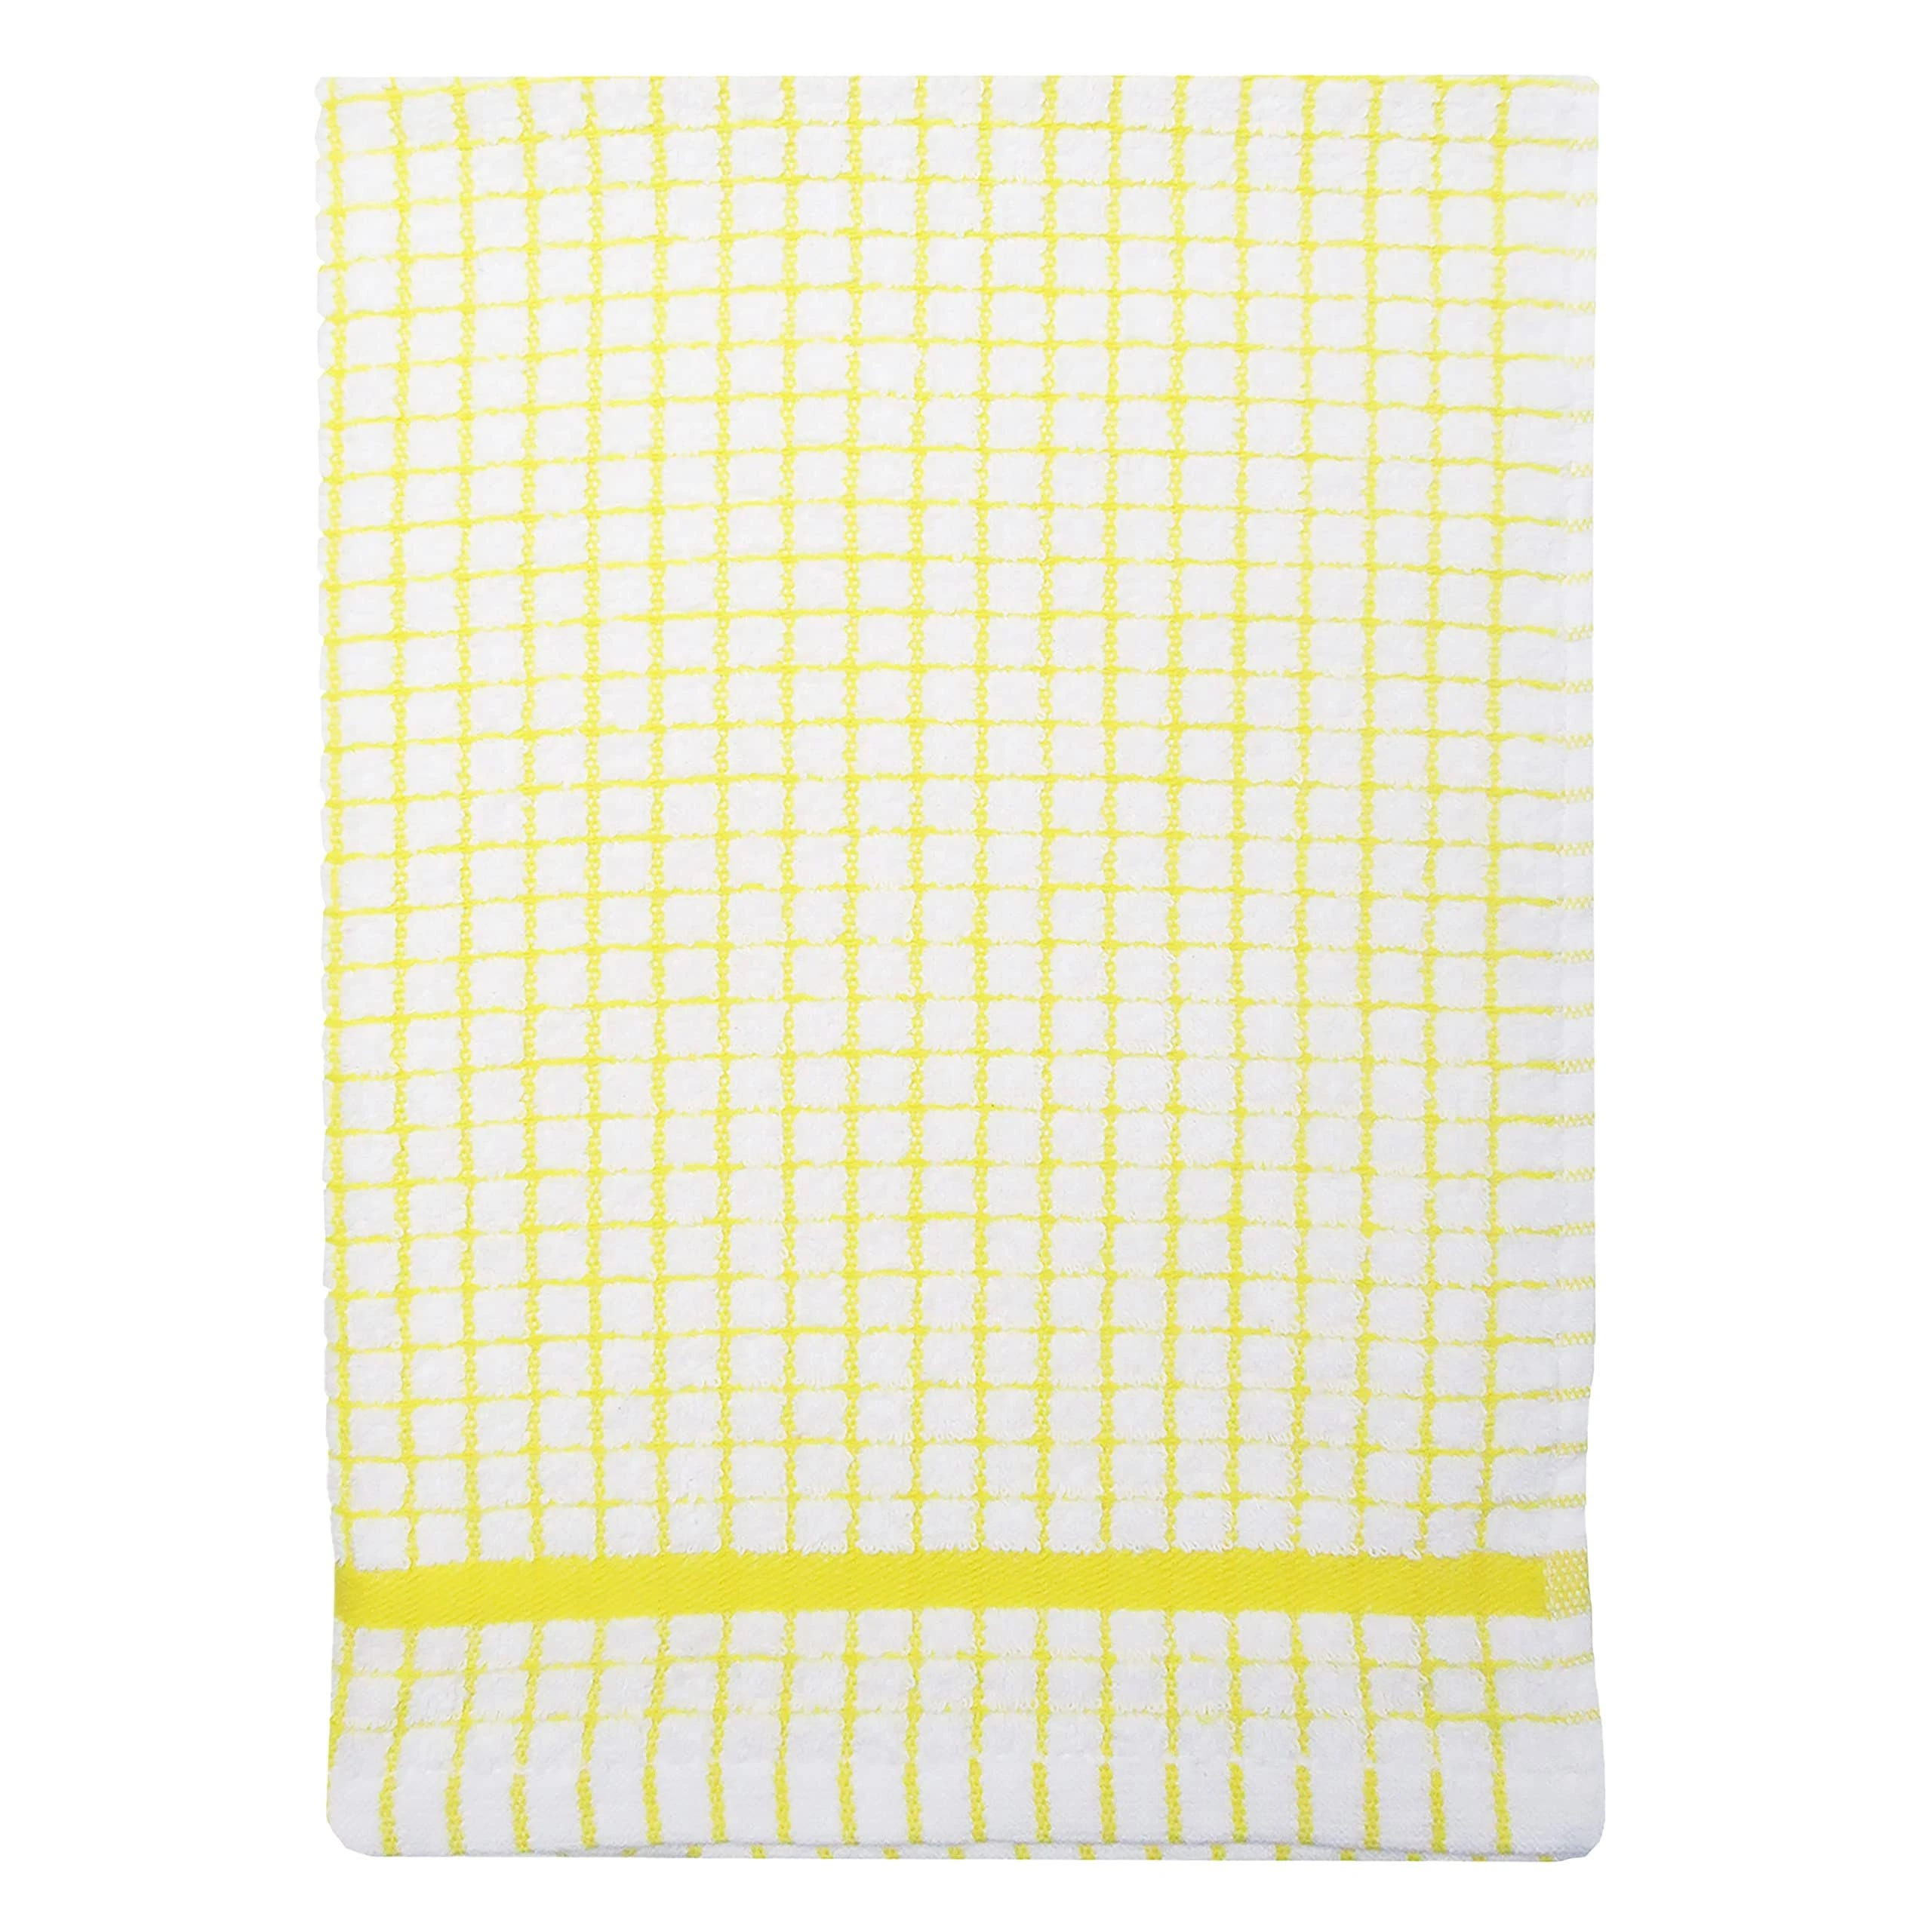 Samuel Lamont Poli-Dri Gold Dish Towel for Drying | Image